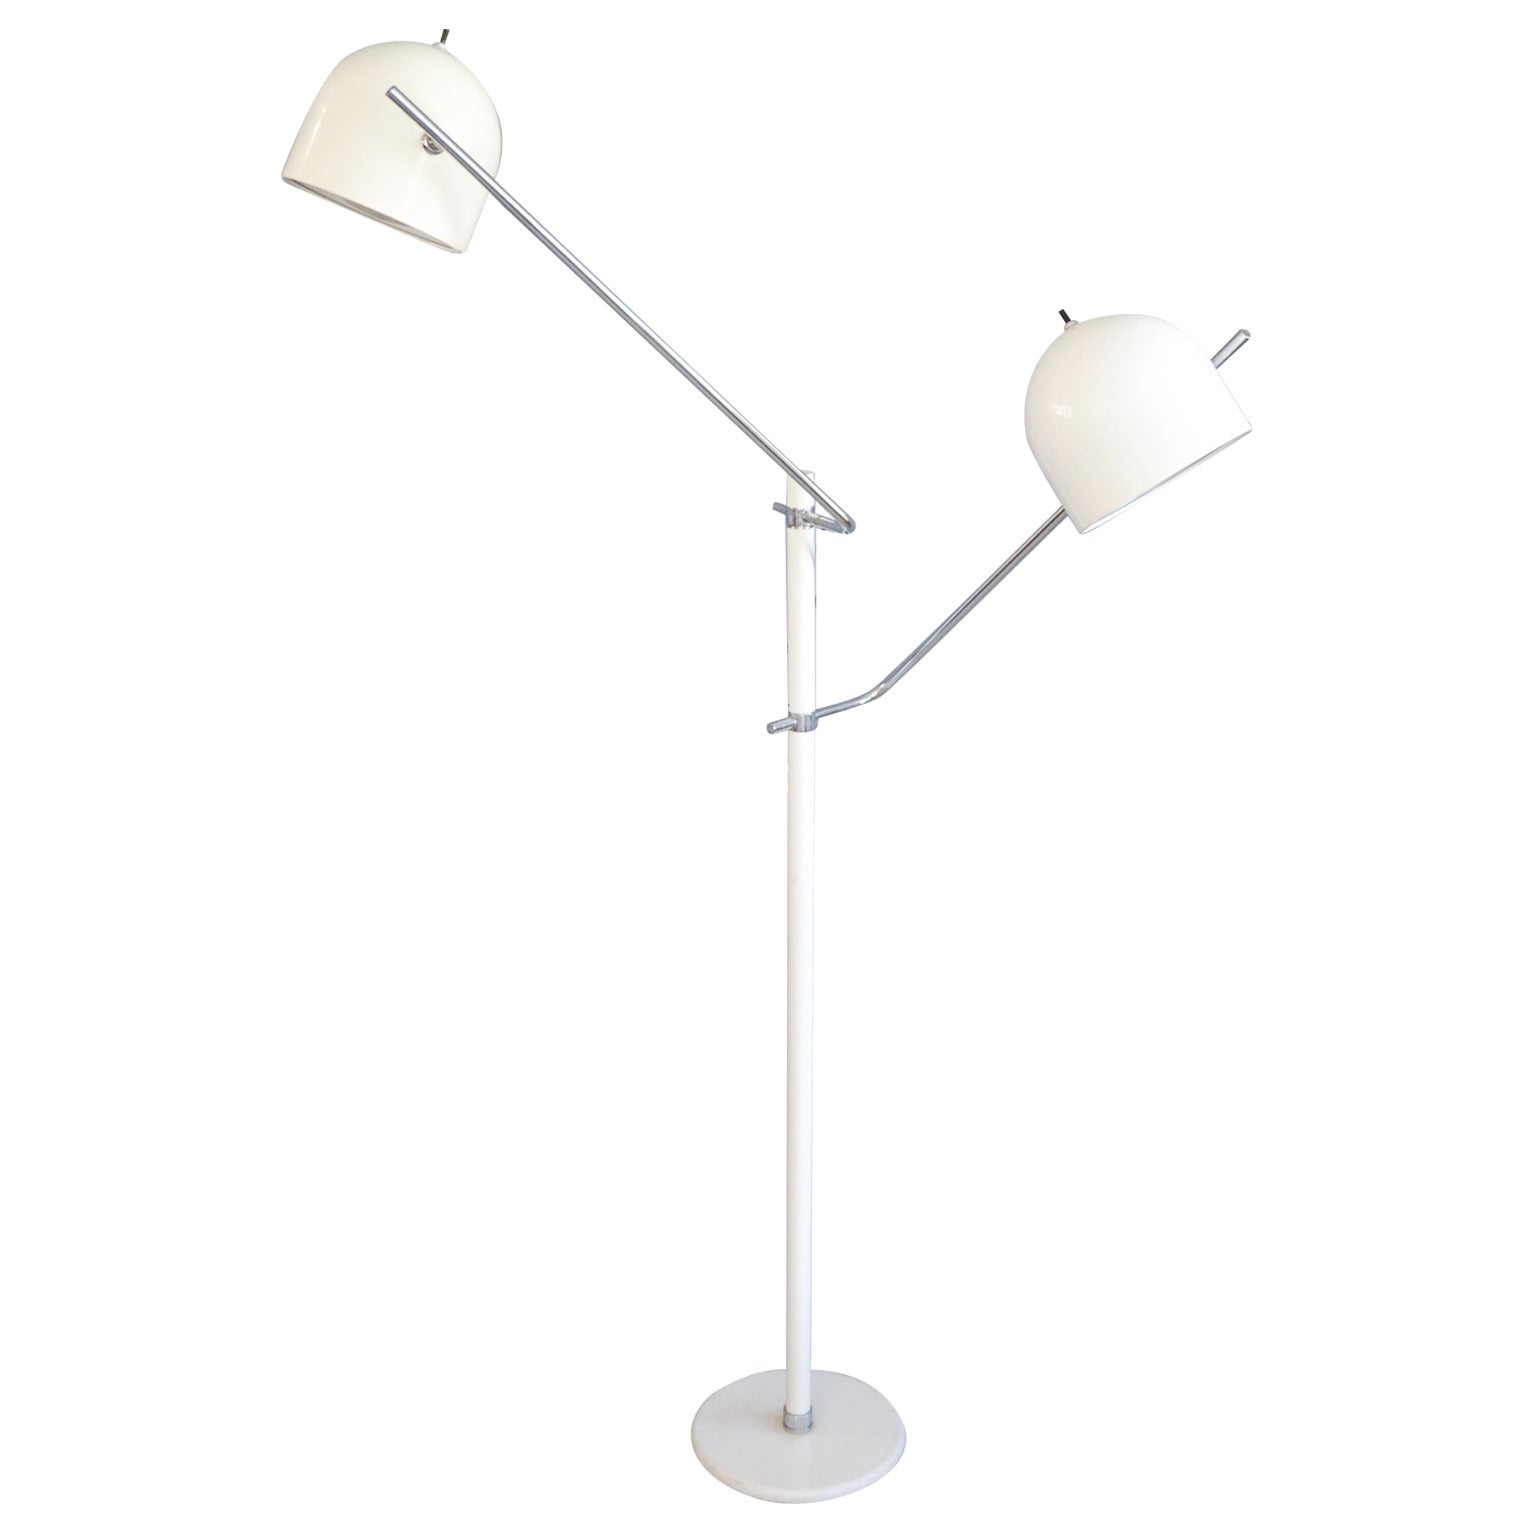 Italian Two-Arm Articulating Floor Lamp